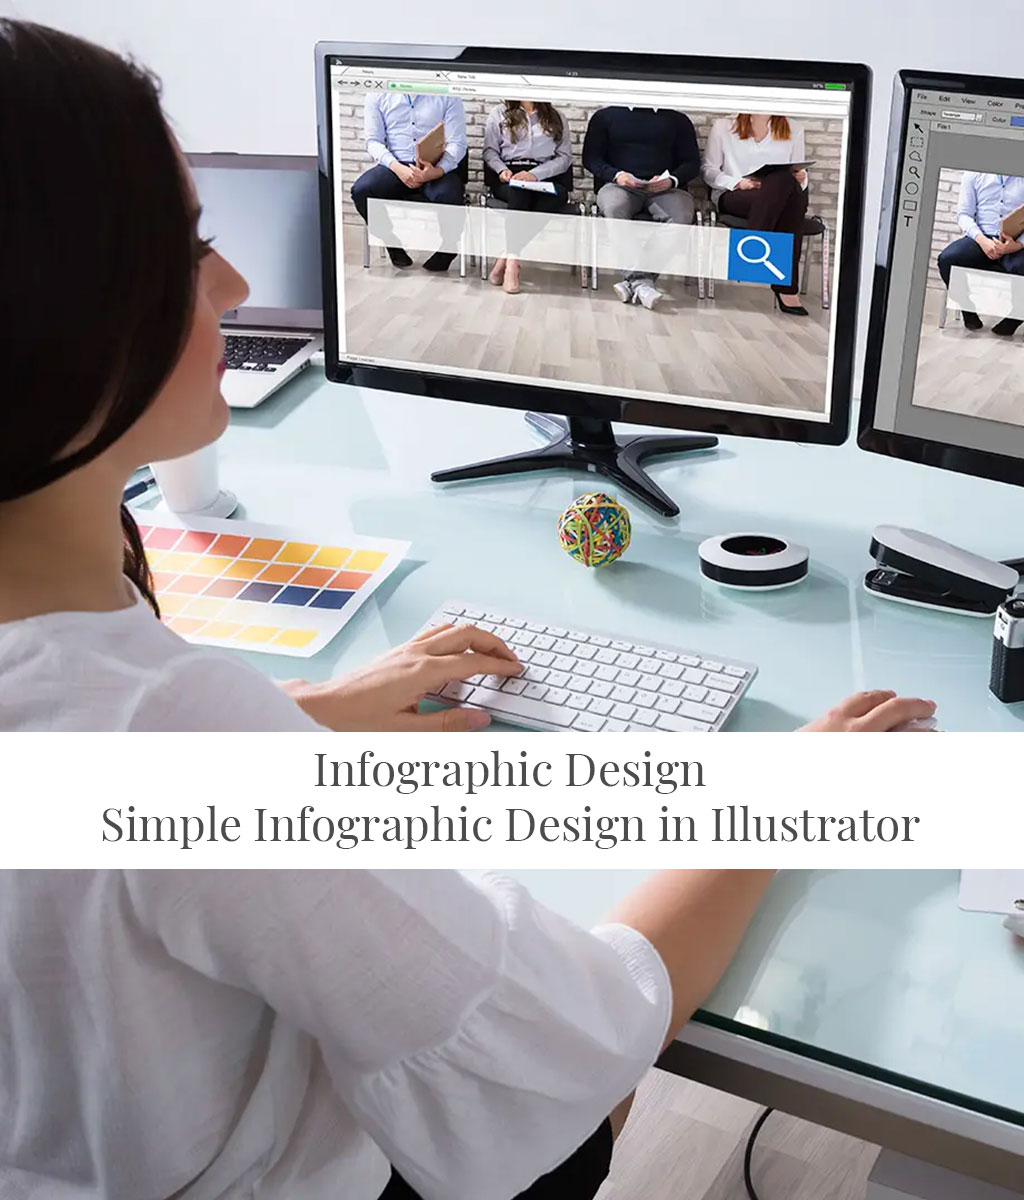 Infographic Design Course